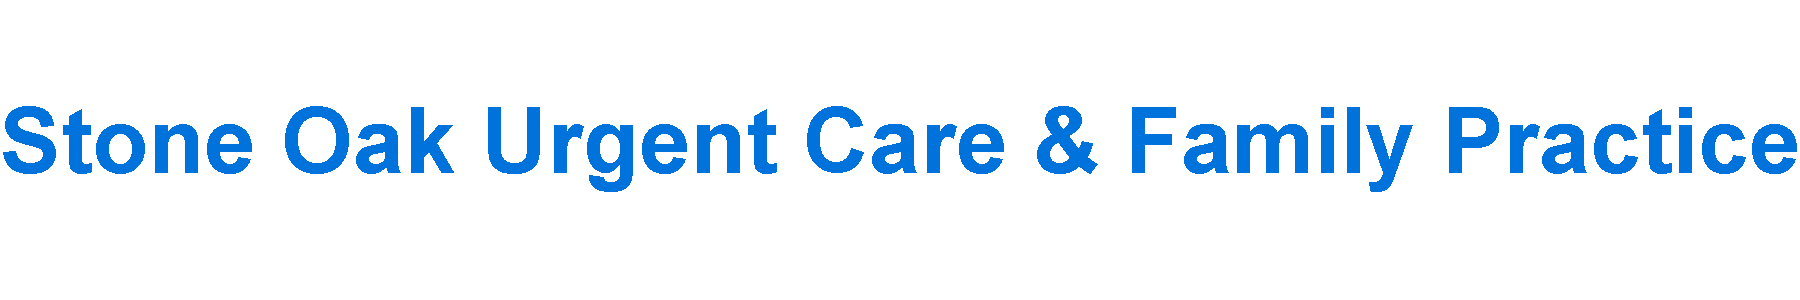 Stone Oak Urgent Care & Family Practice - Sudhir R. Gogu, DO, PhD, MBA Logo